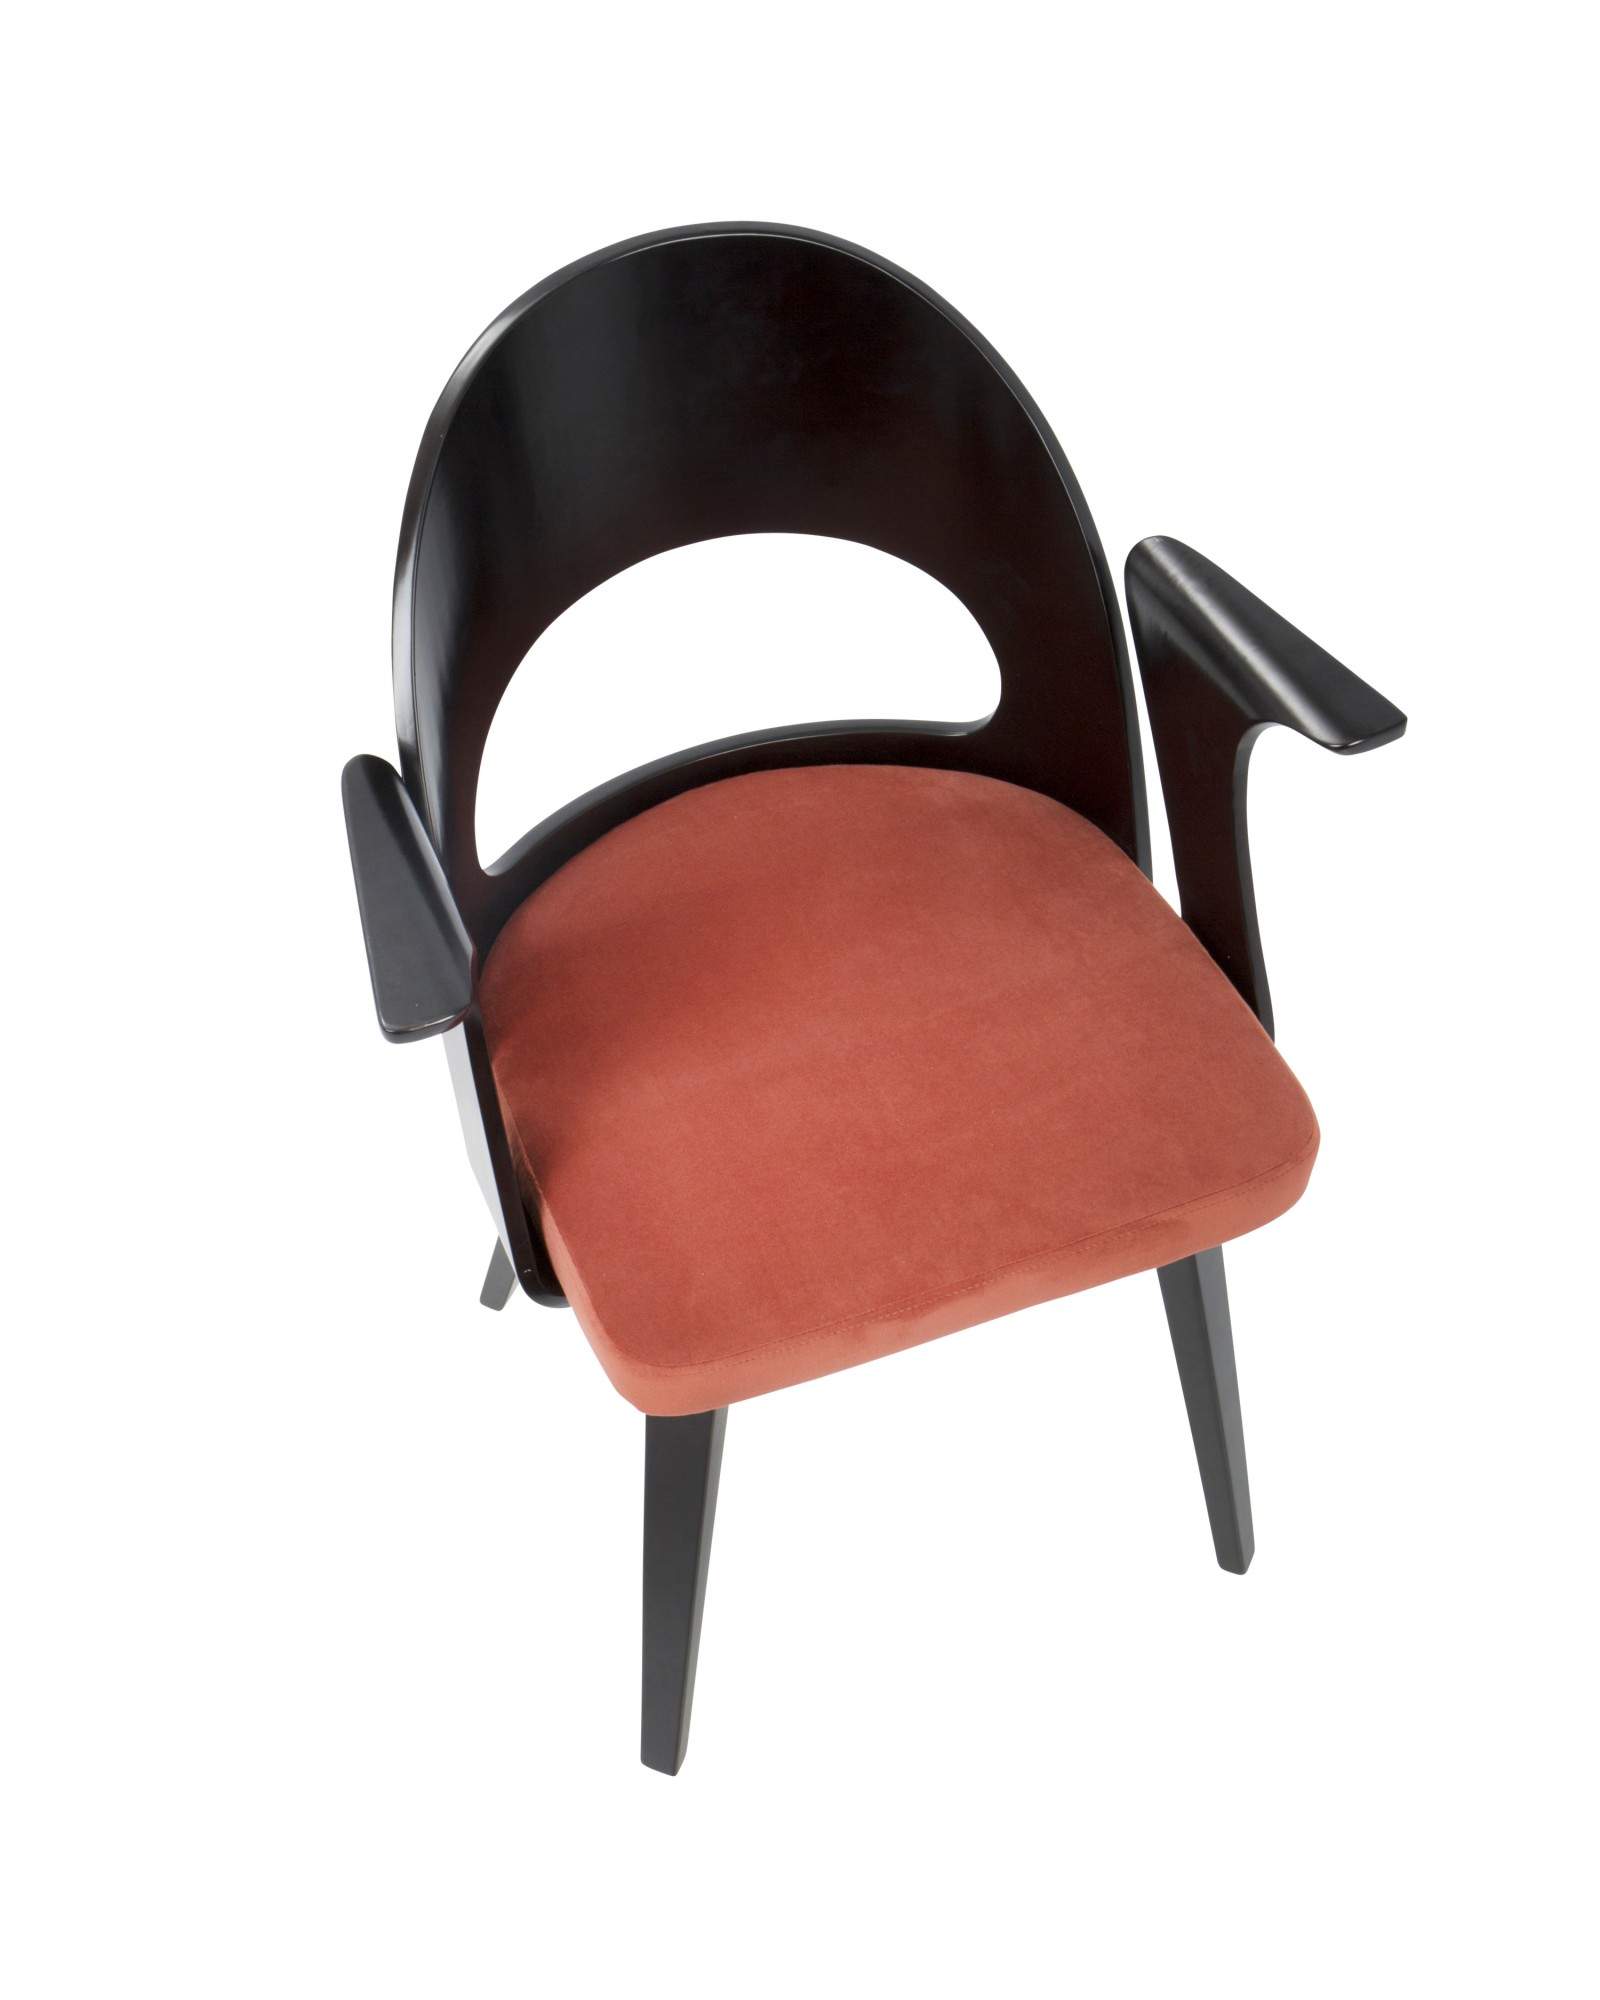 Verino Mid-Century Modern Dining/Accent Chair in Espresso with Orange Velvet